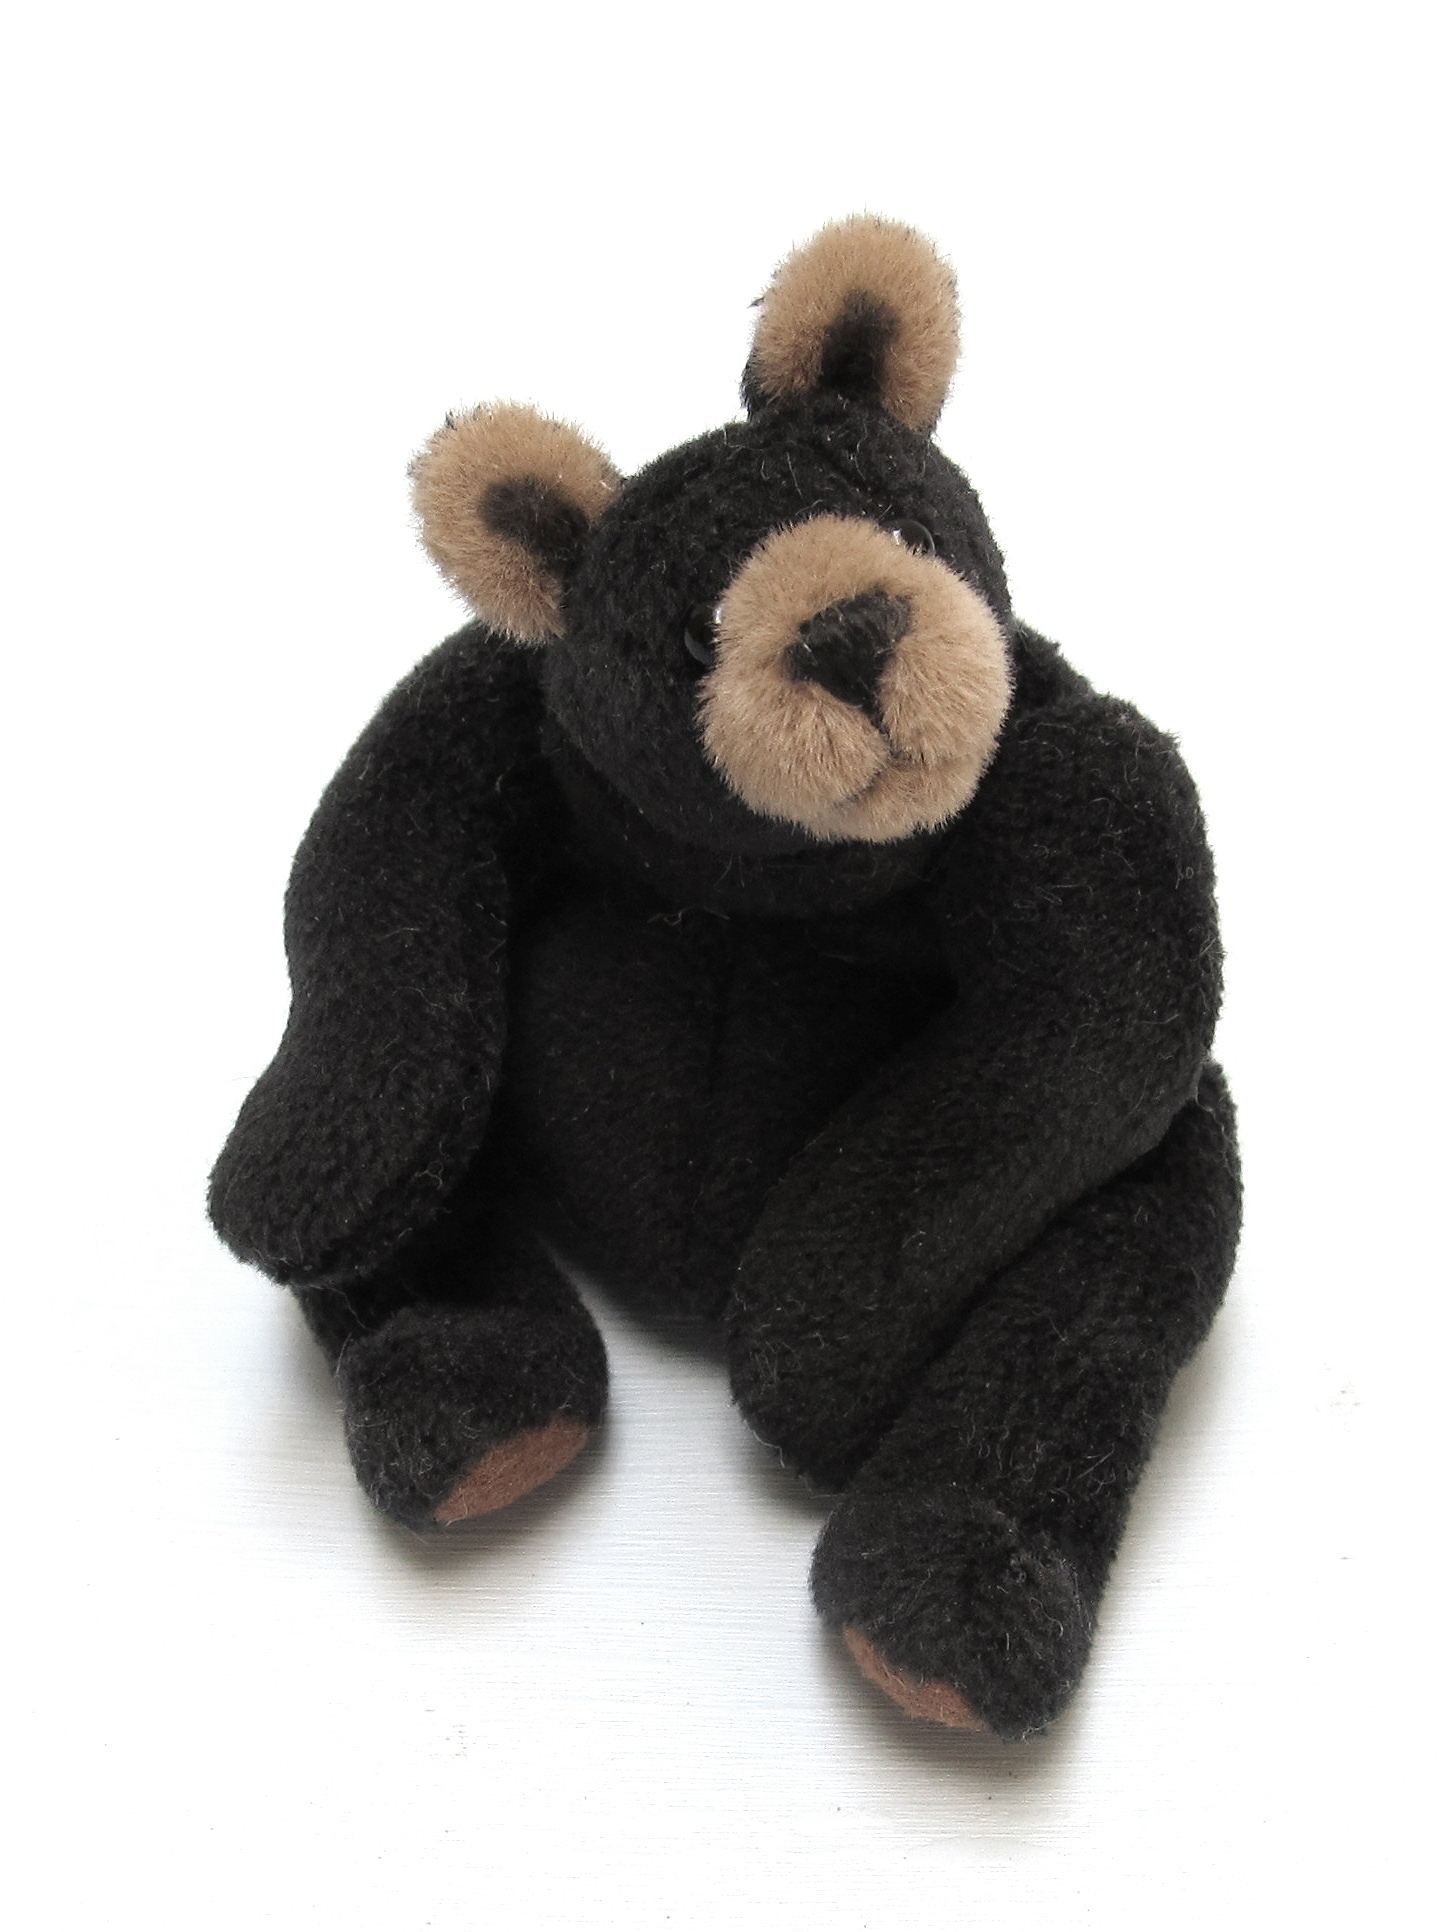 Baby Black Bear 2